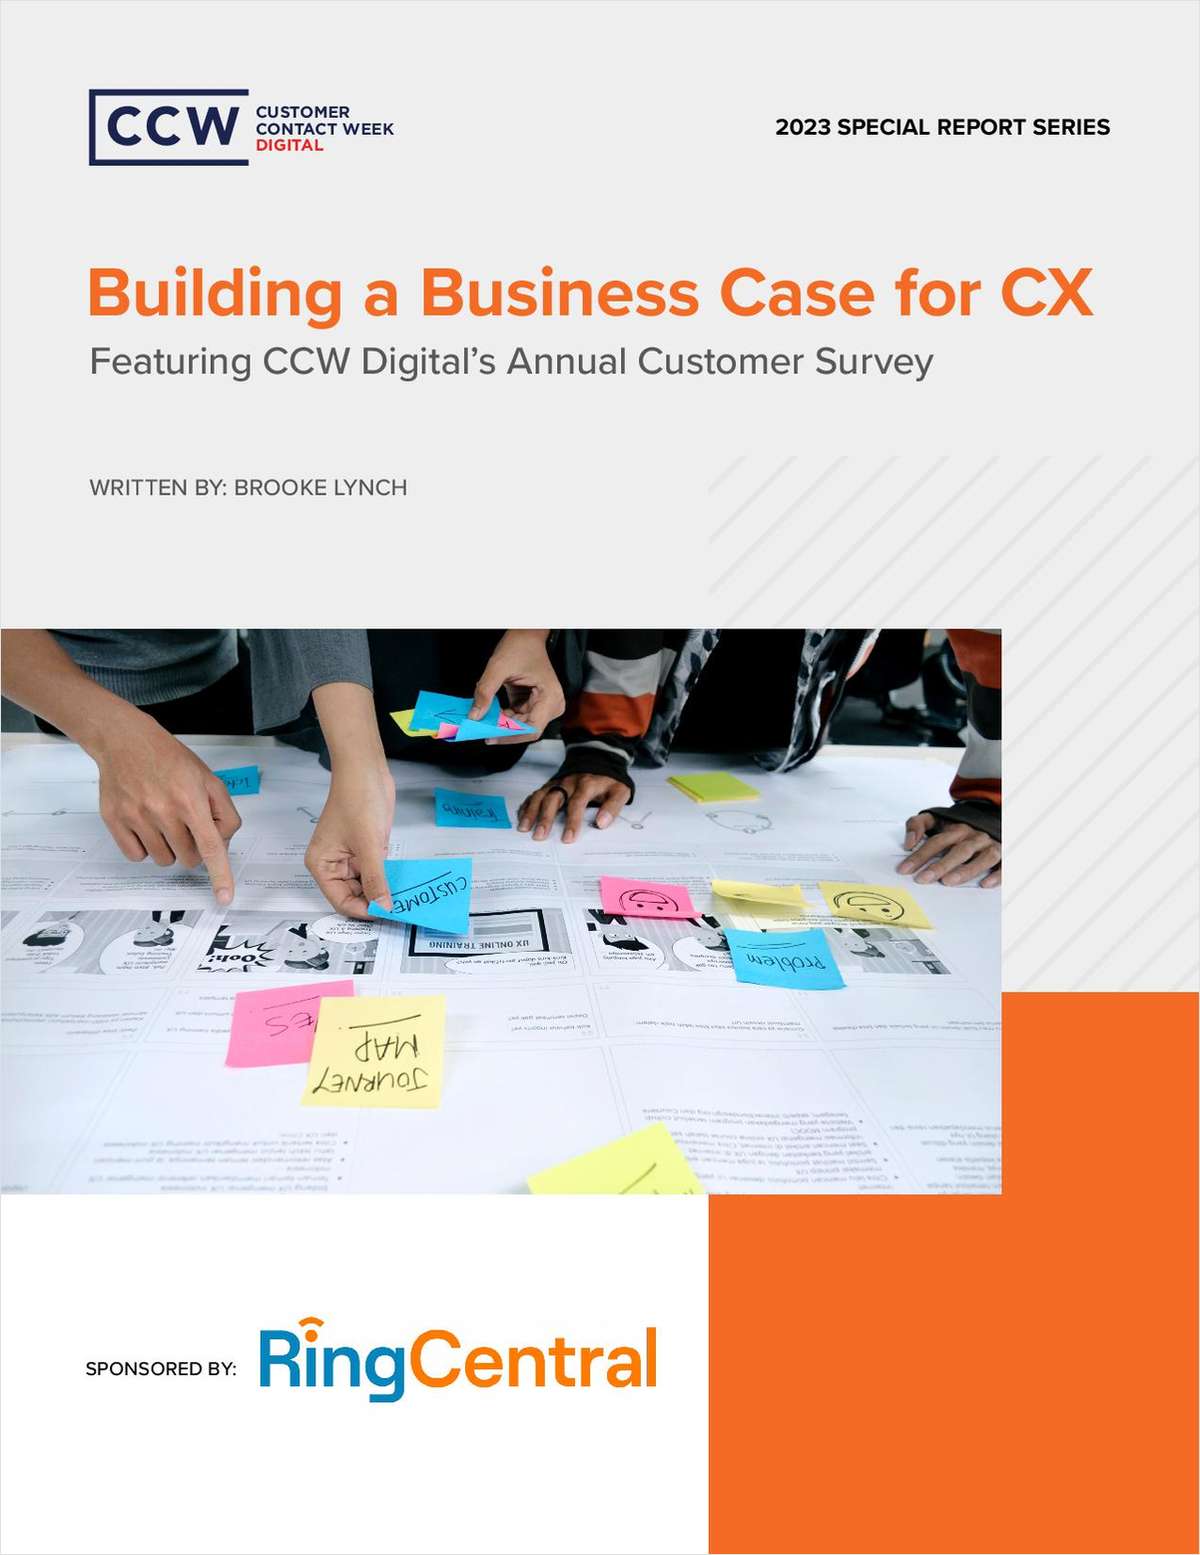 Building a business case for CX